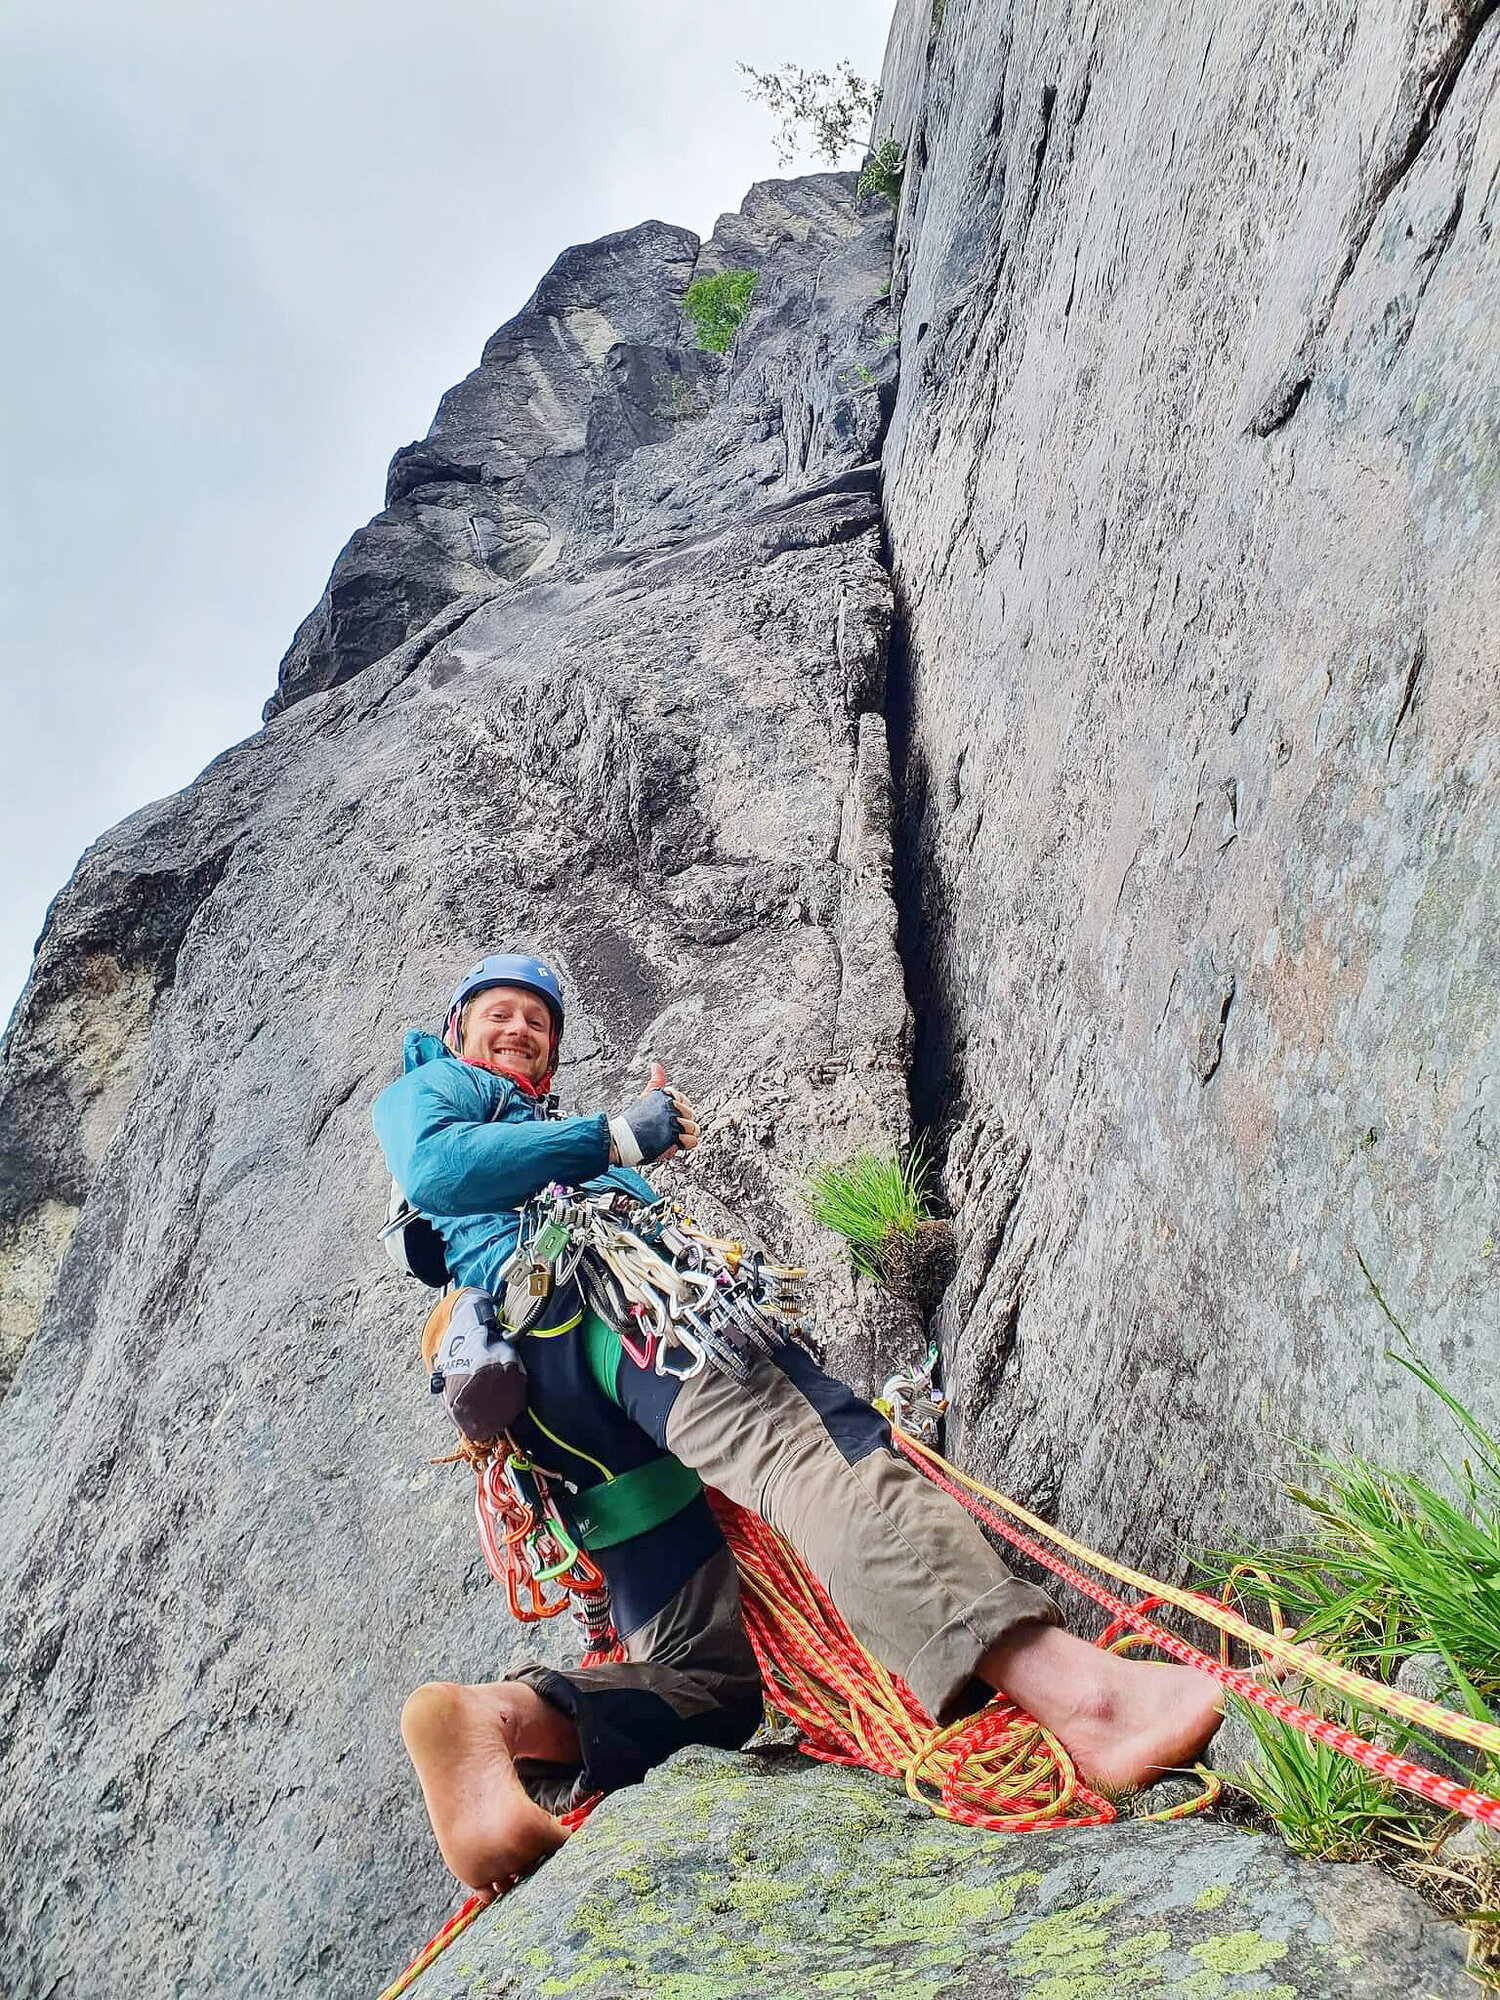 Henrik klatrer i fjell